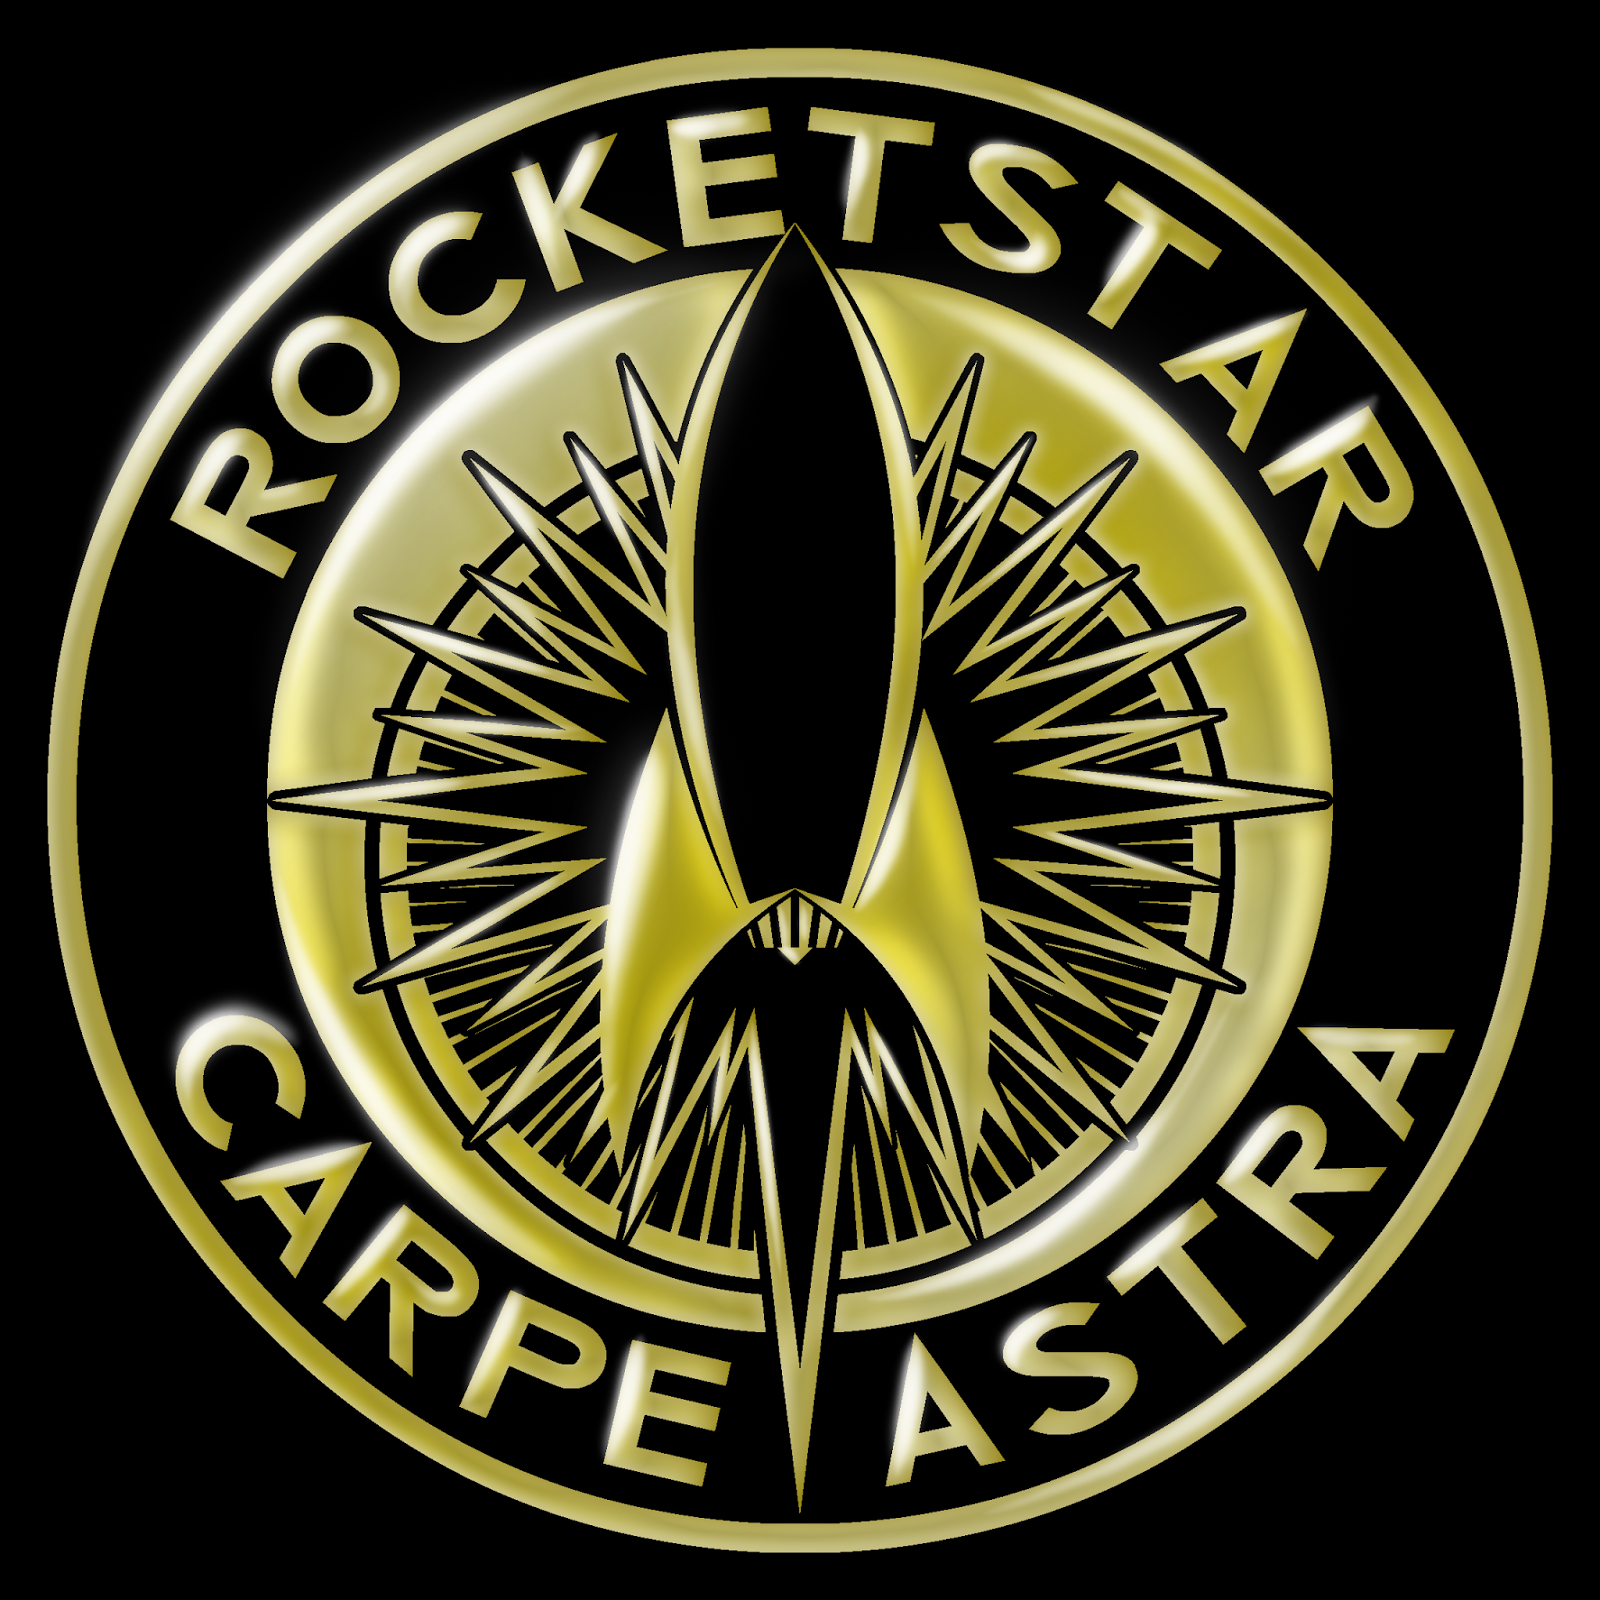 Photo of RocketStar, LLC in New York City, New York, United States - 1 Picture of Point of interest, Establishment